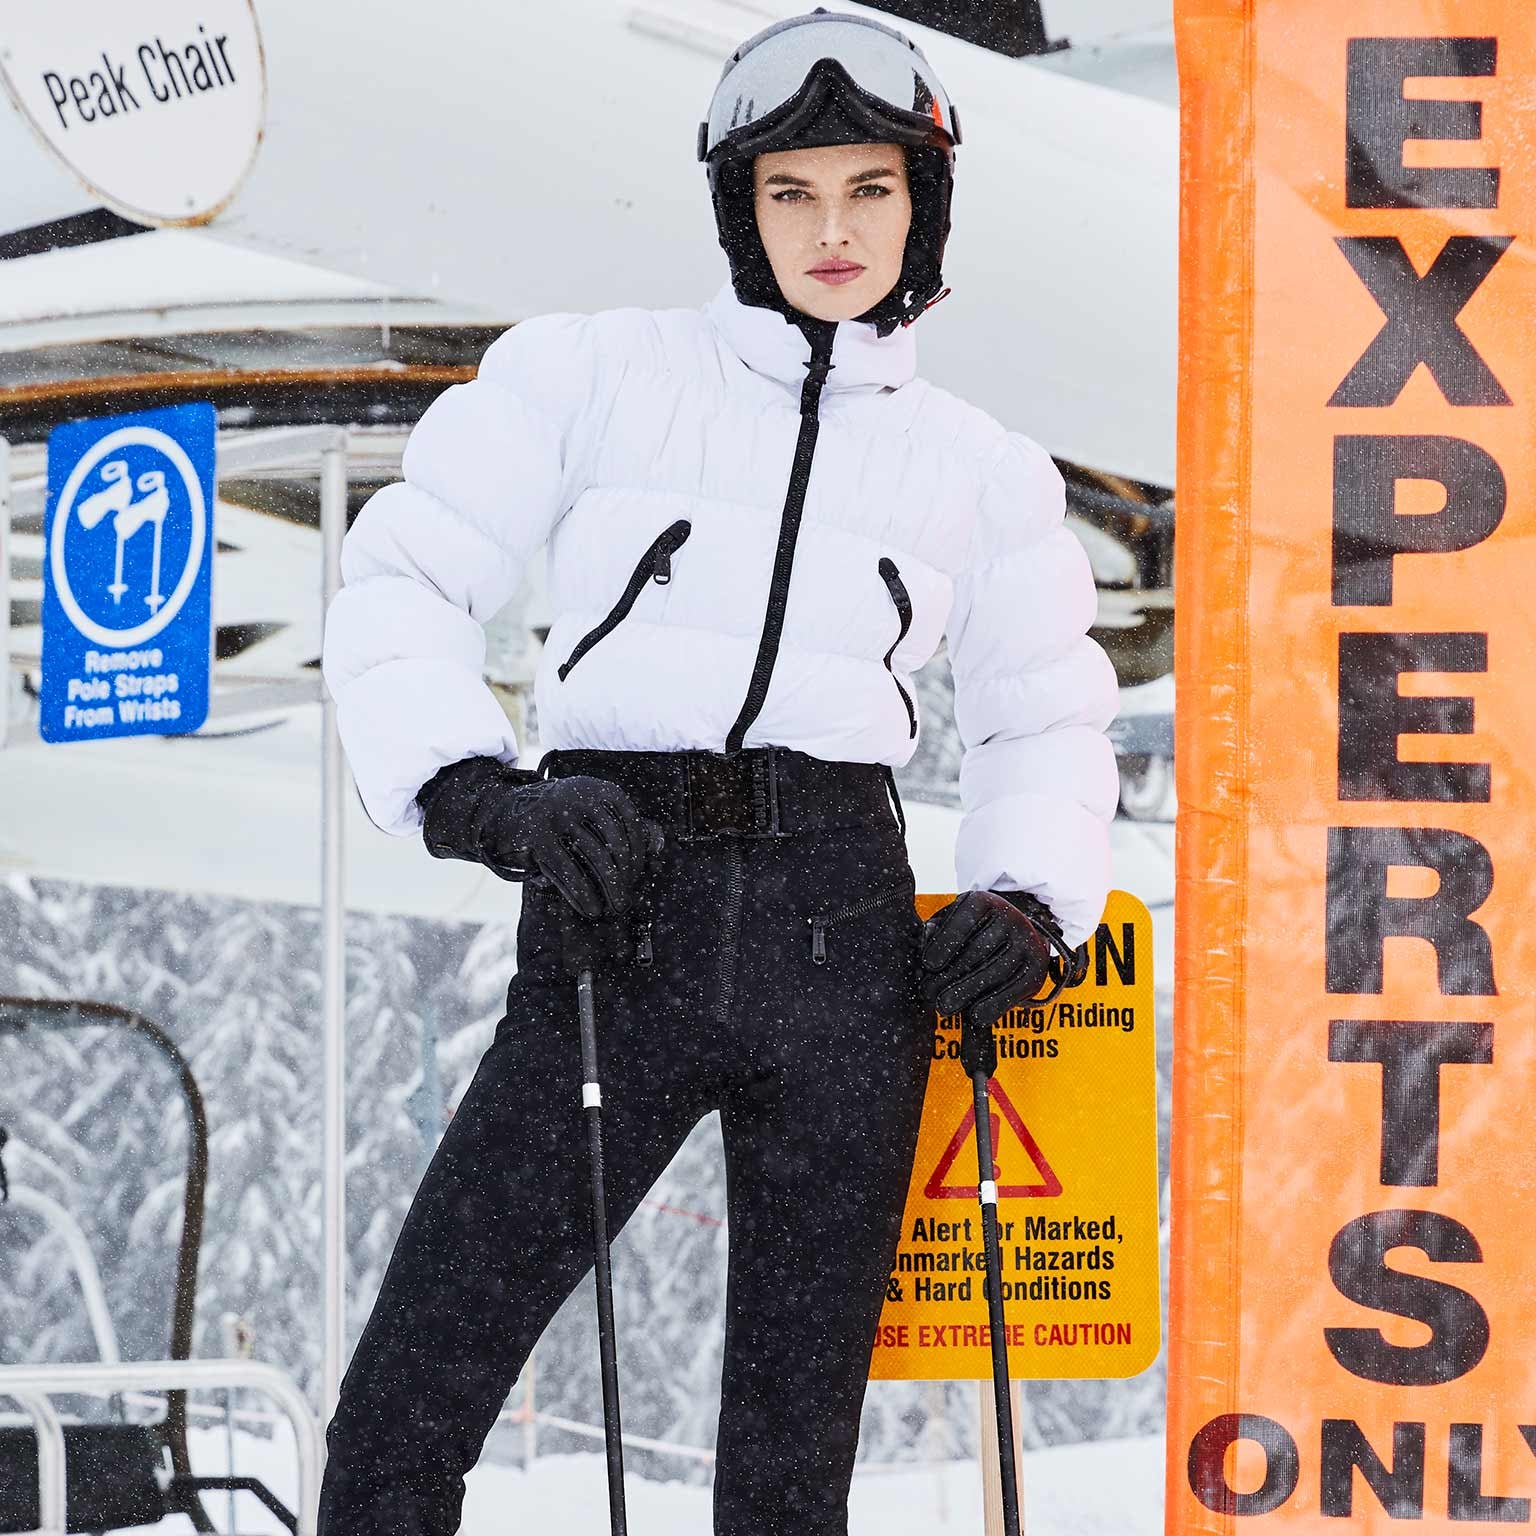 Skis  Shop your ski gear online, winter sale